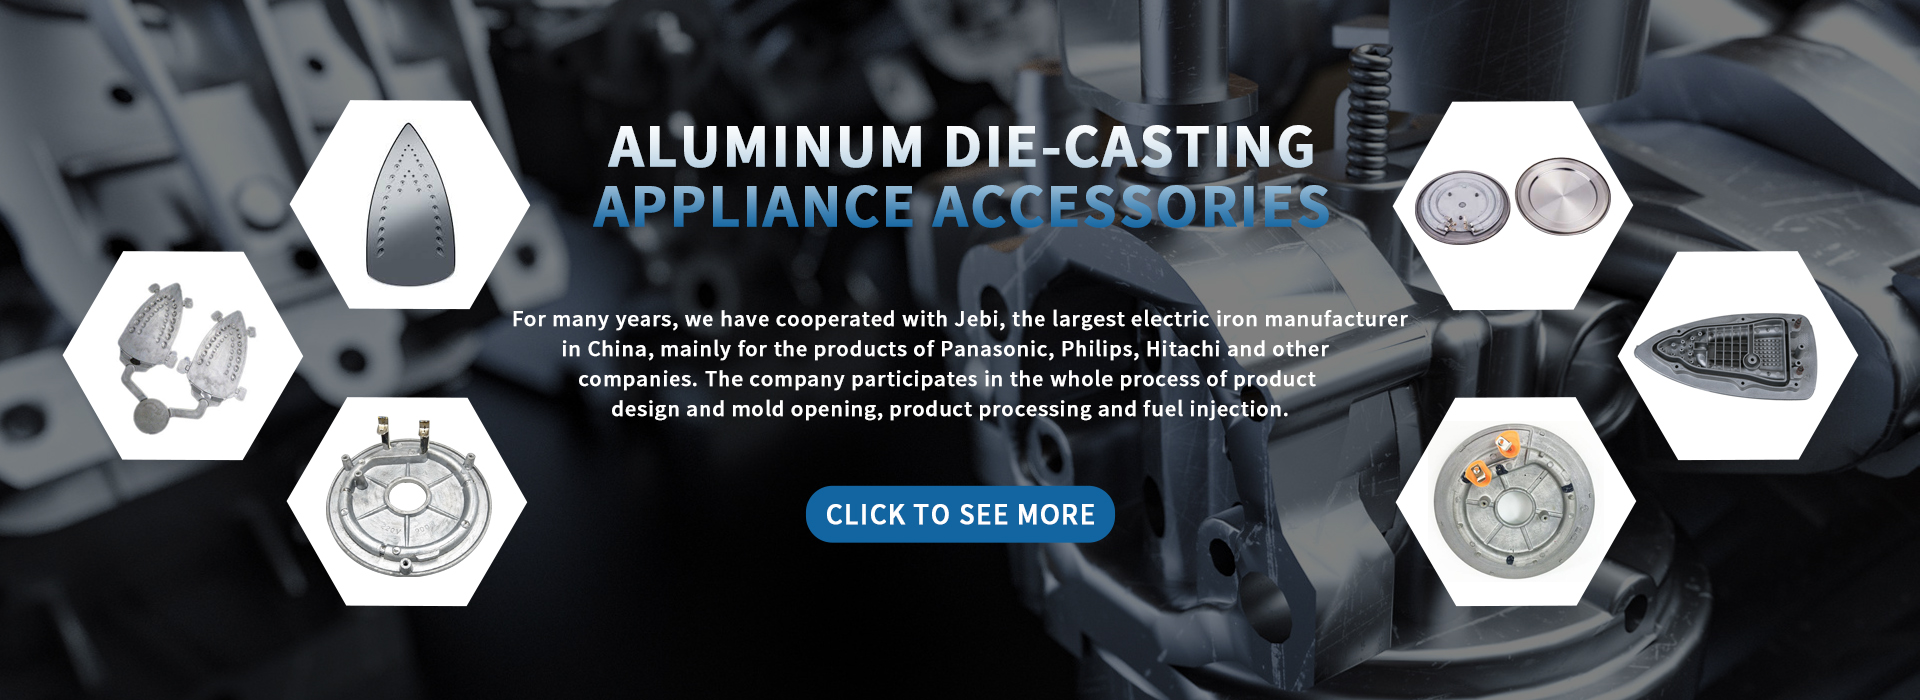 Die casting appliance accessories